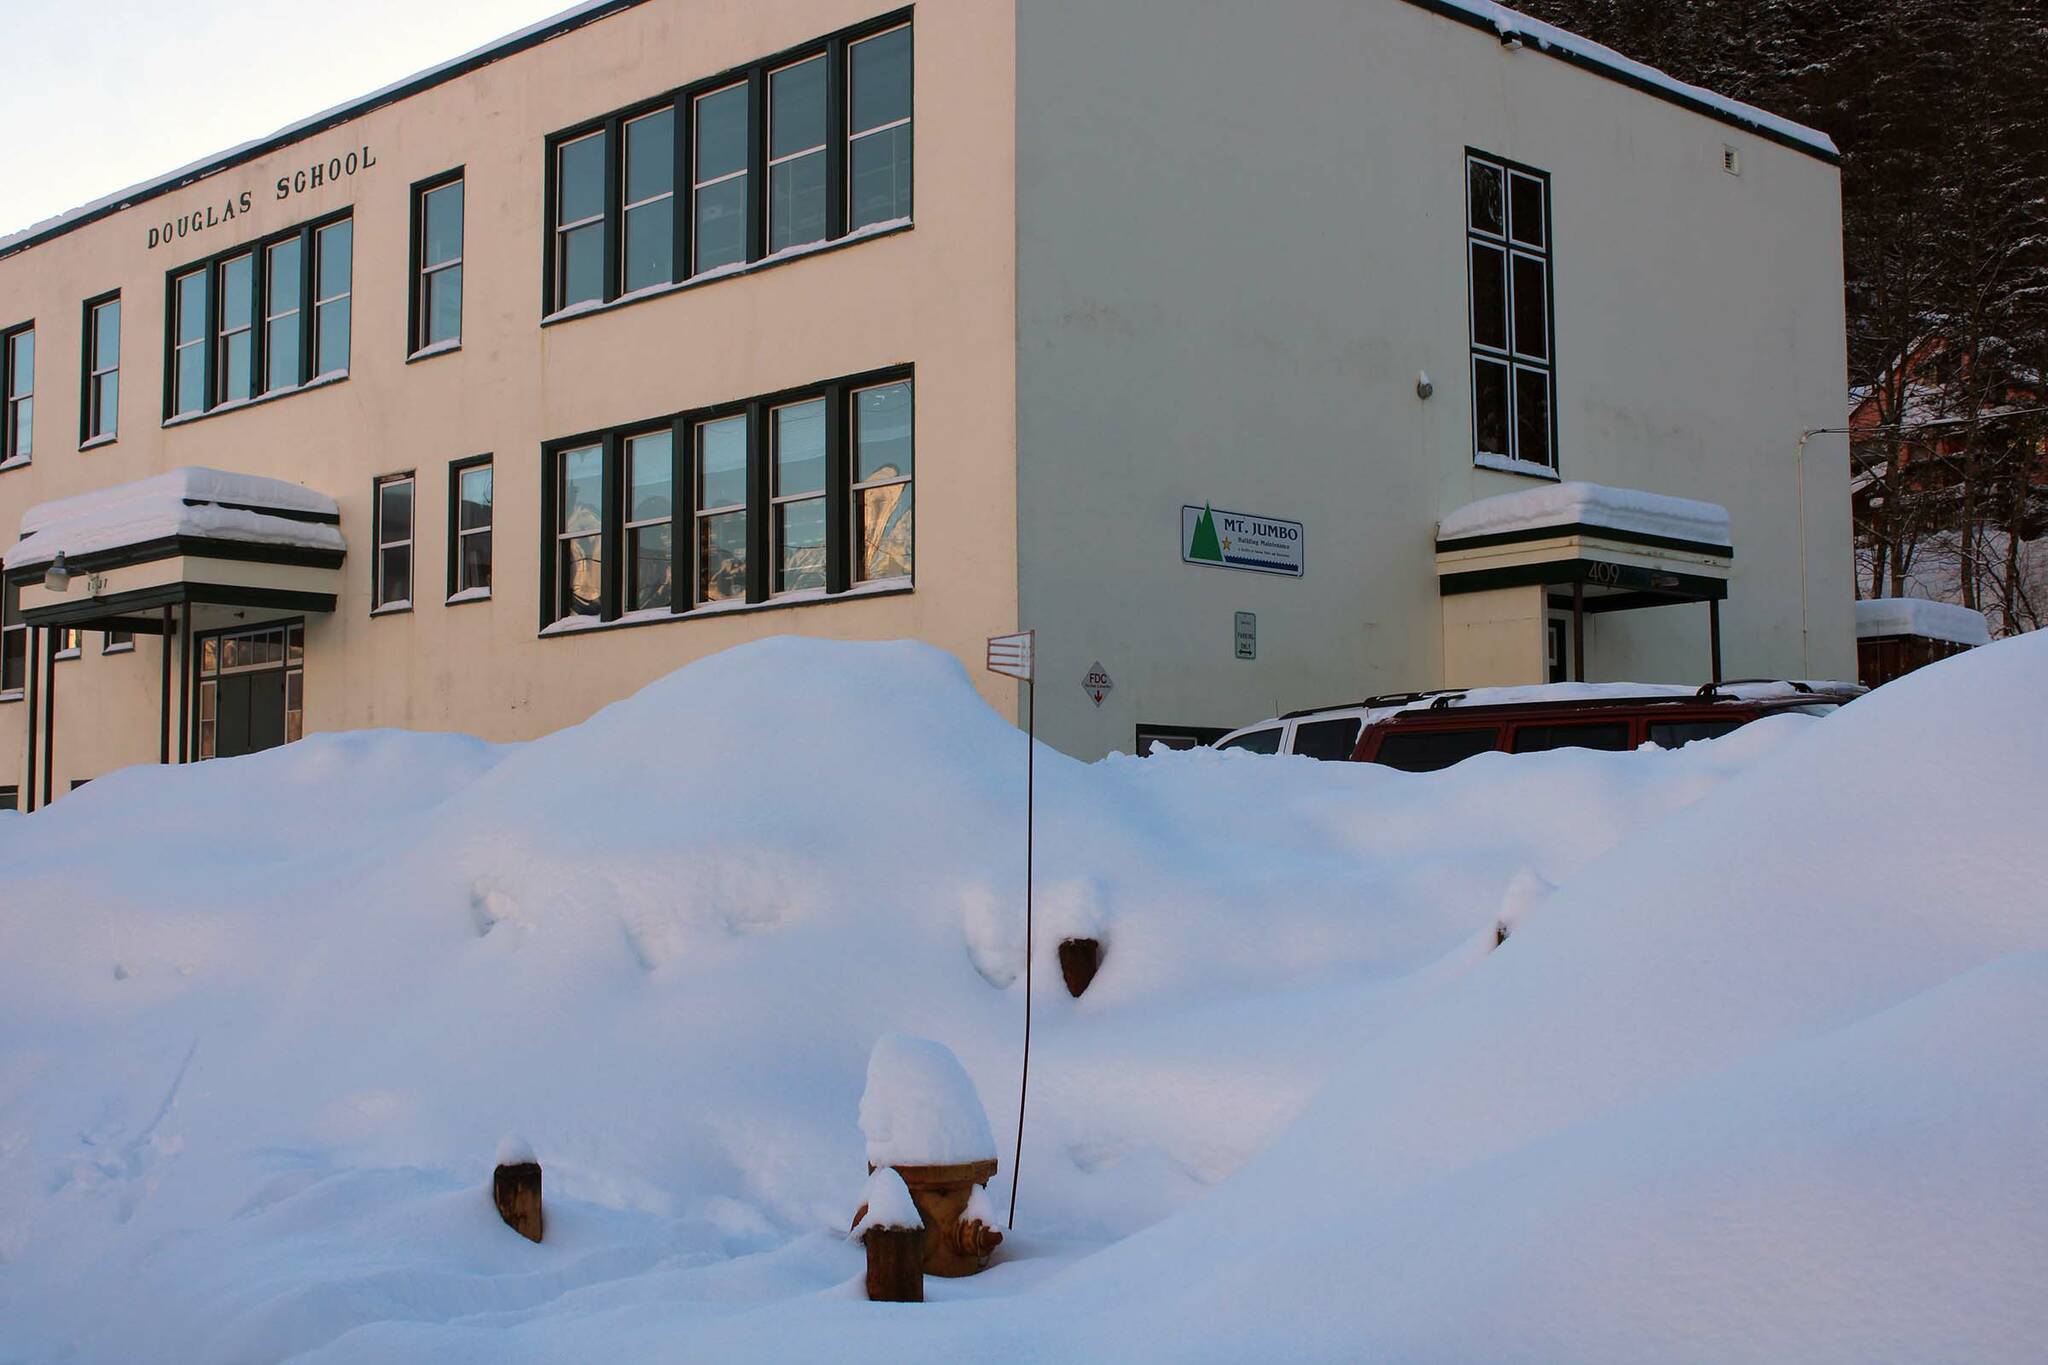 Snow piles up outside the Mt Jumbo gym building in Douglas on Dec. 28. (Dana Zigmund/Juneau Empire)